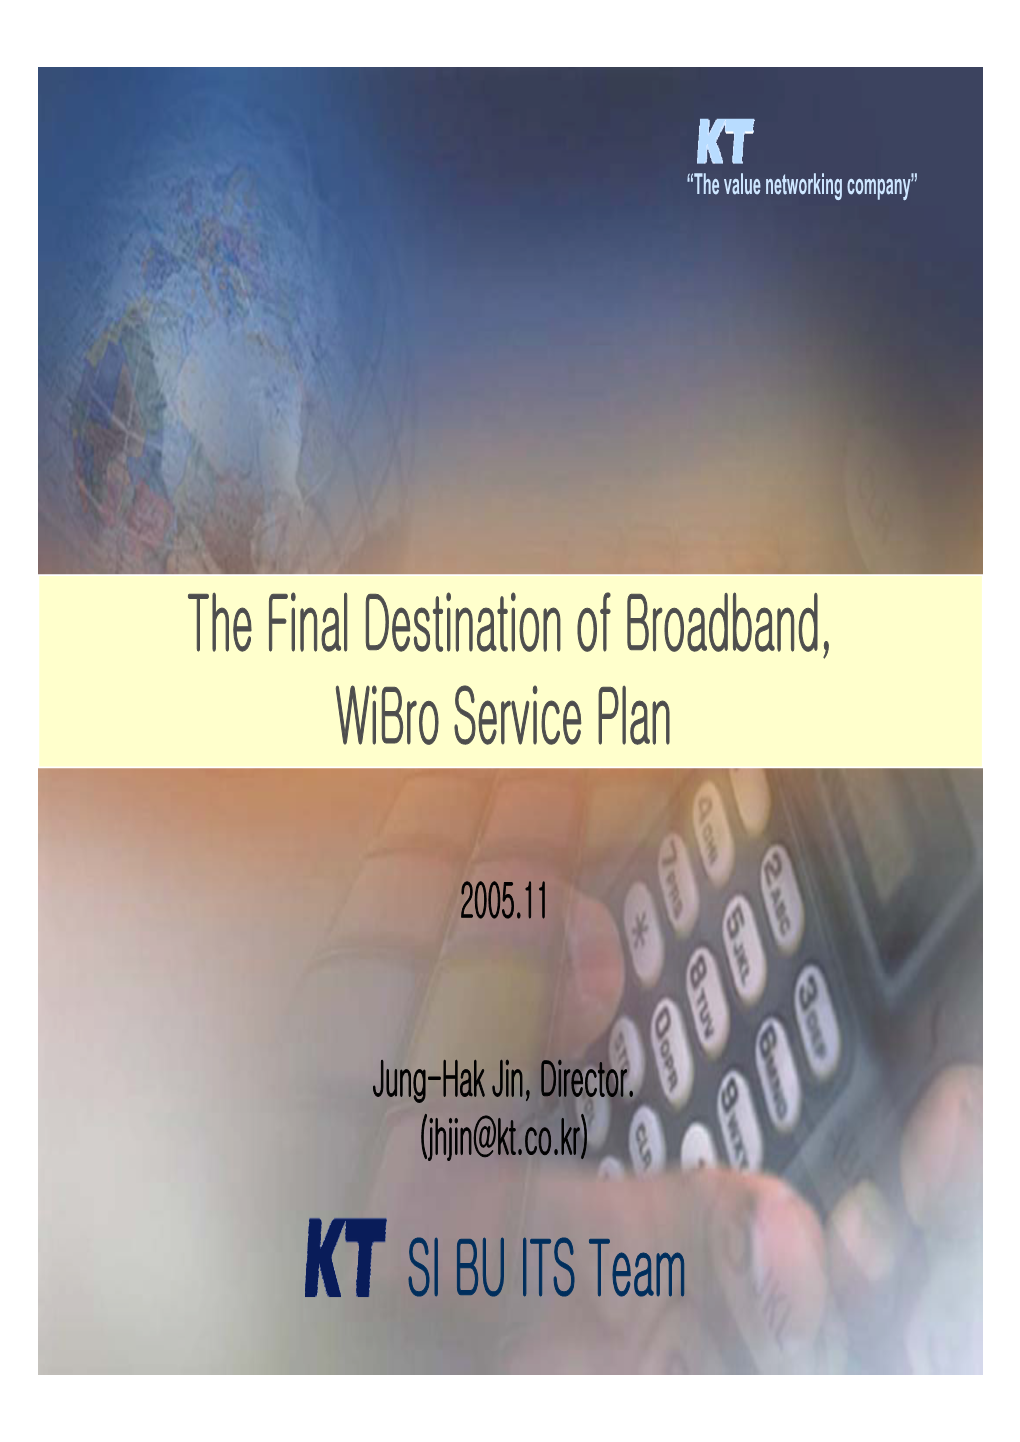 The Final Destination of Broadband, Wibro Service Plan SI BU ITS Team